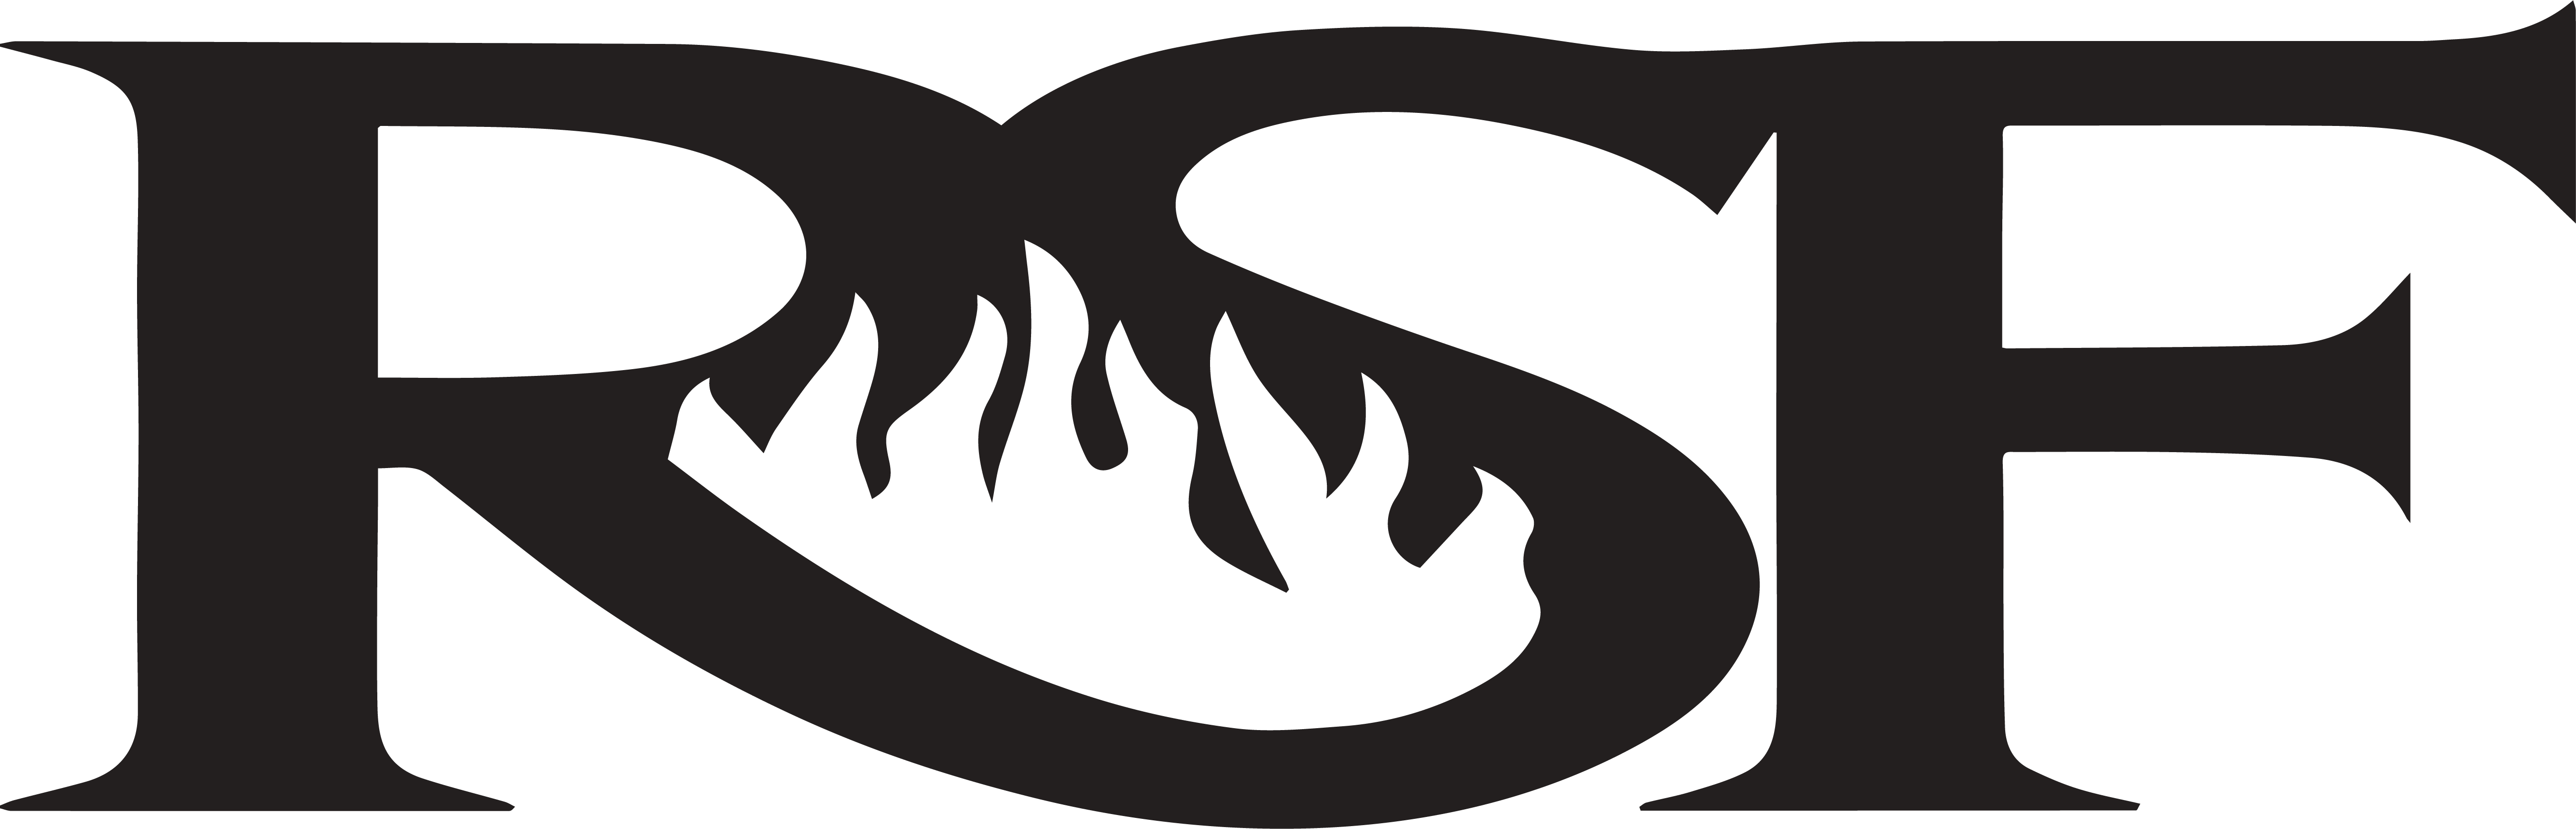 RSF Logo - The Heating Lodge